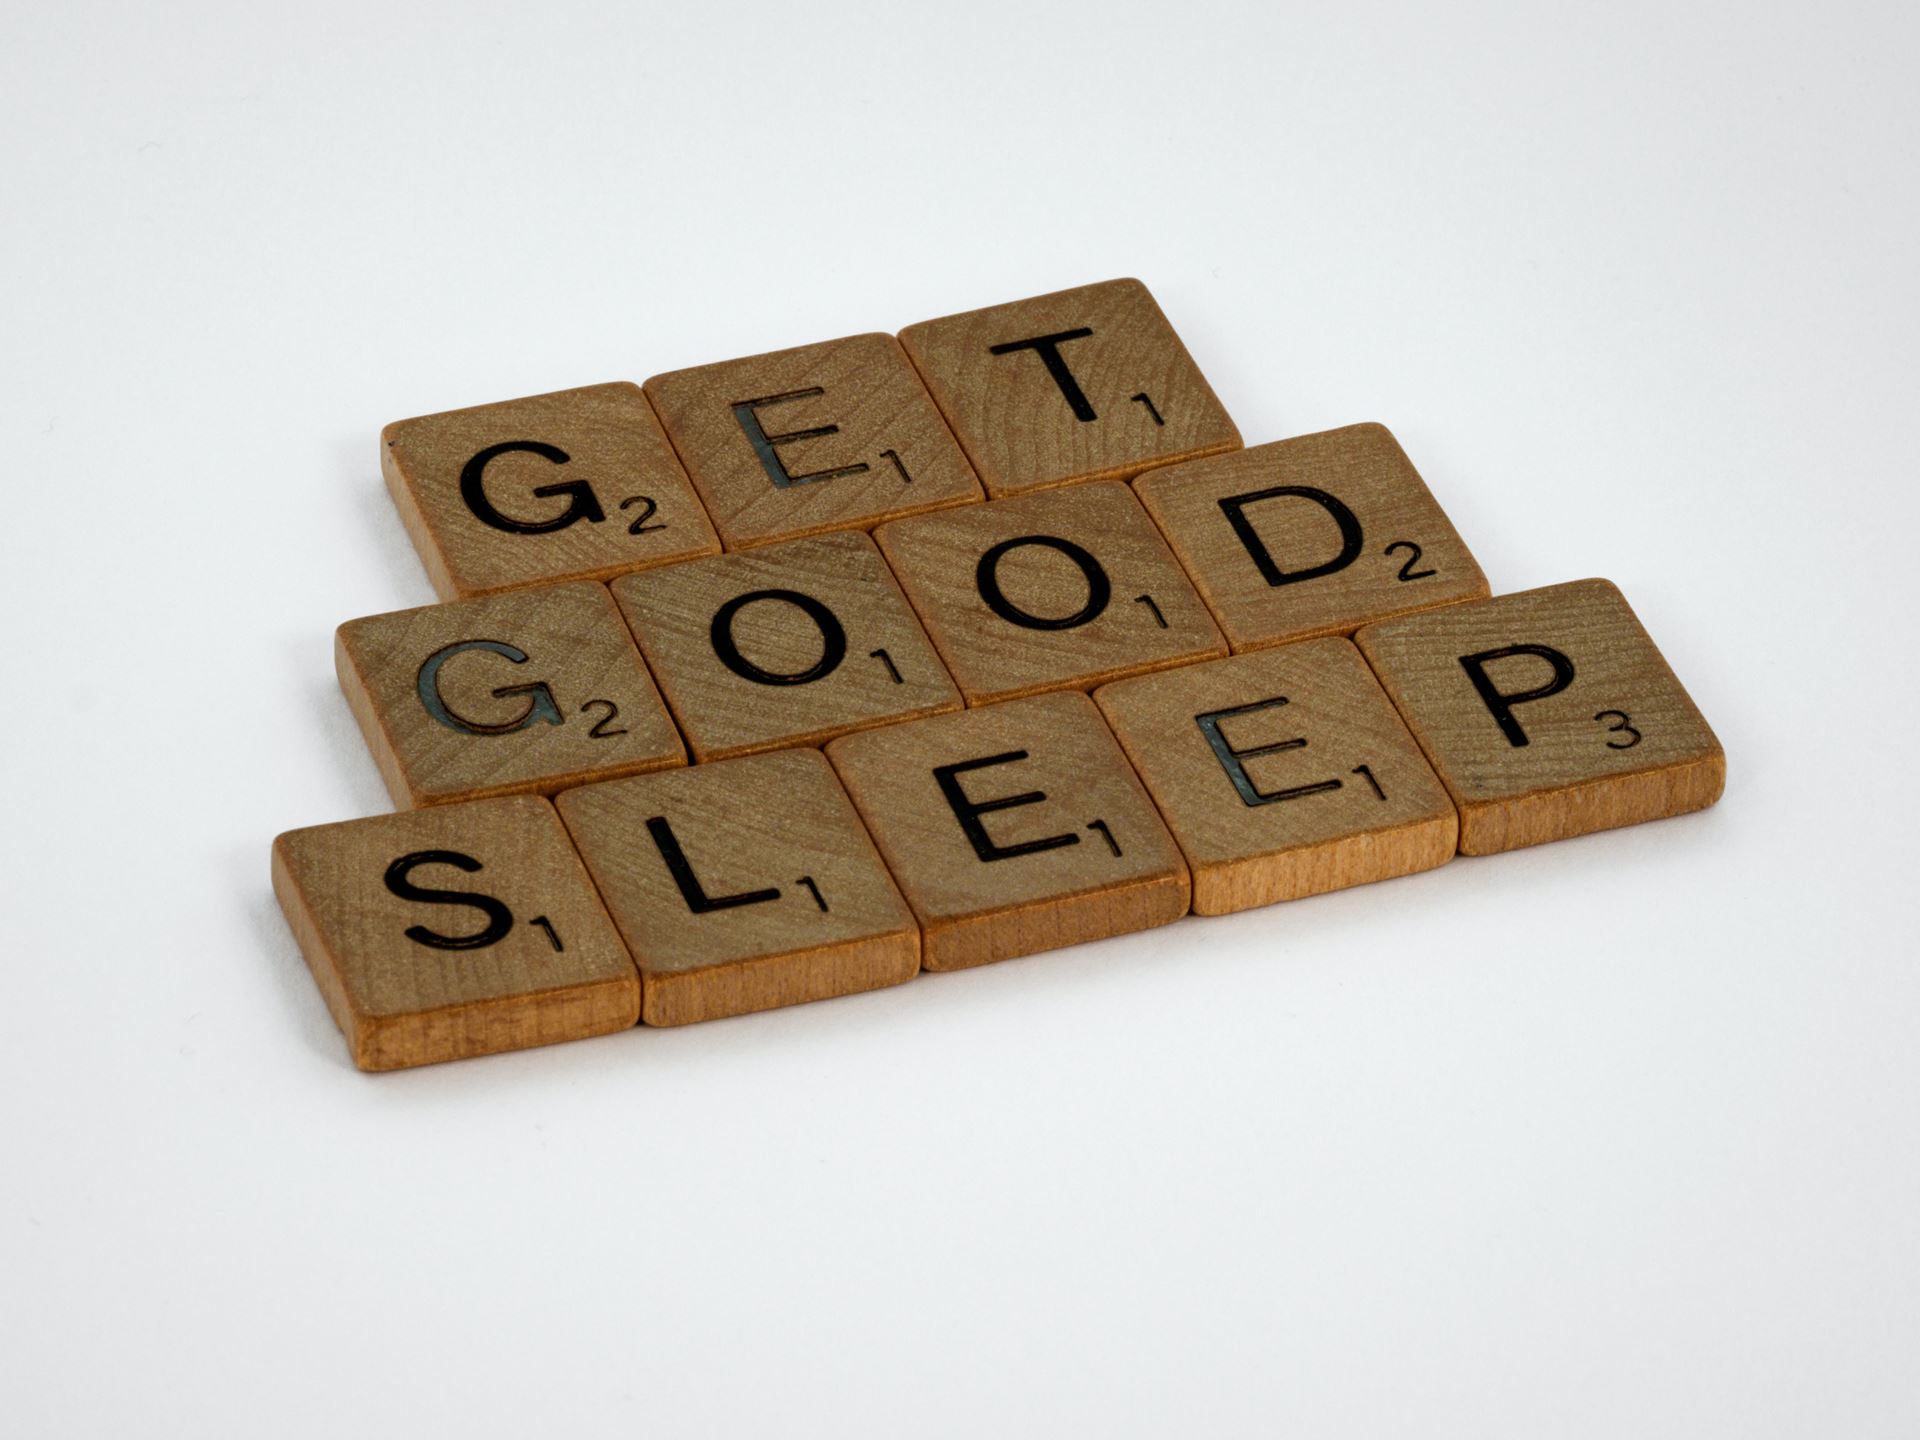 Brown wooden scrabble tiles spell out 'Get Good Sleep'